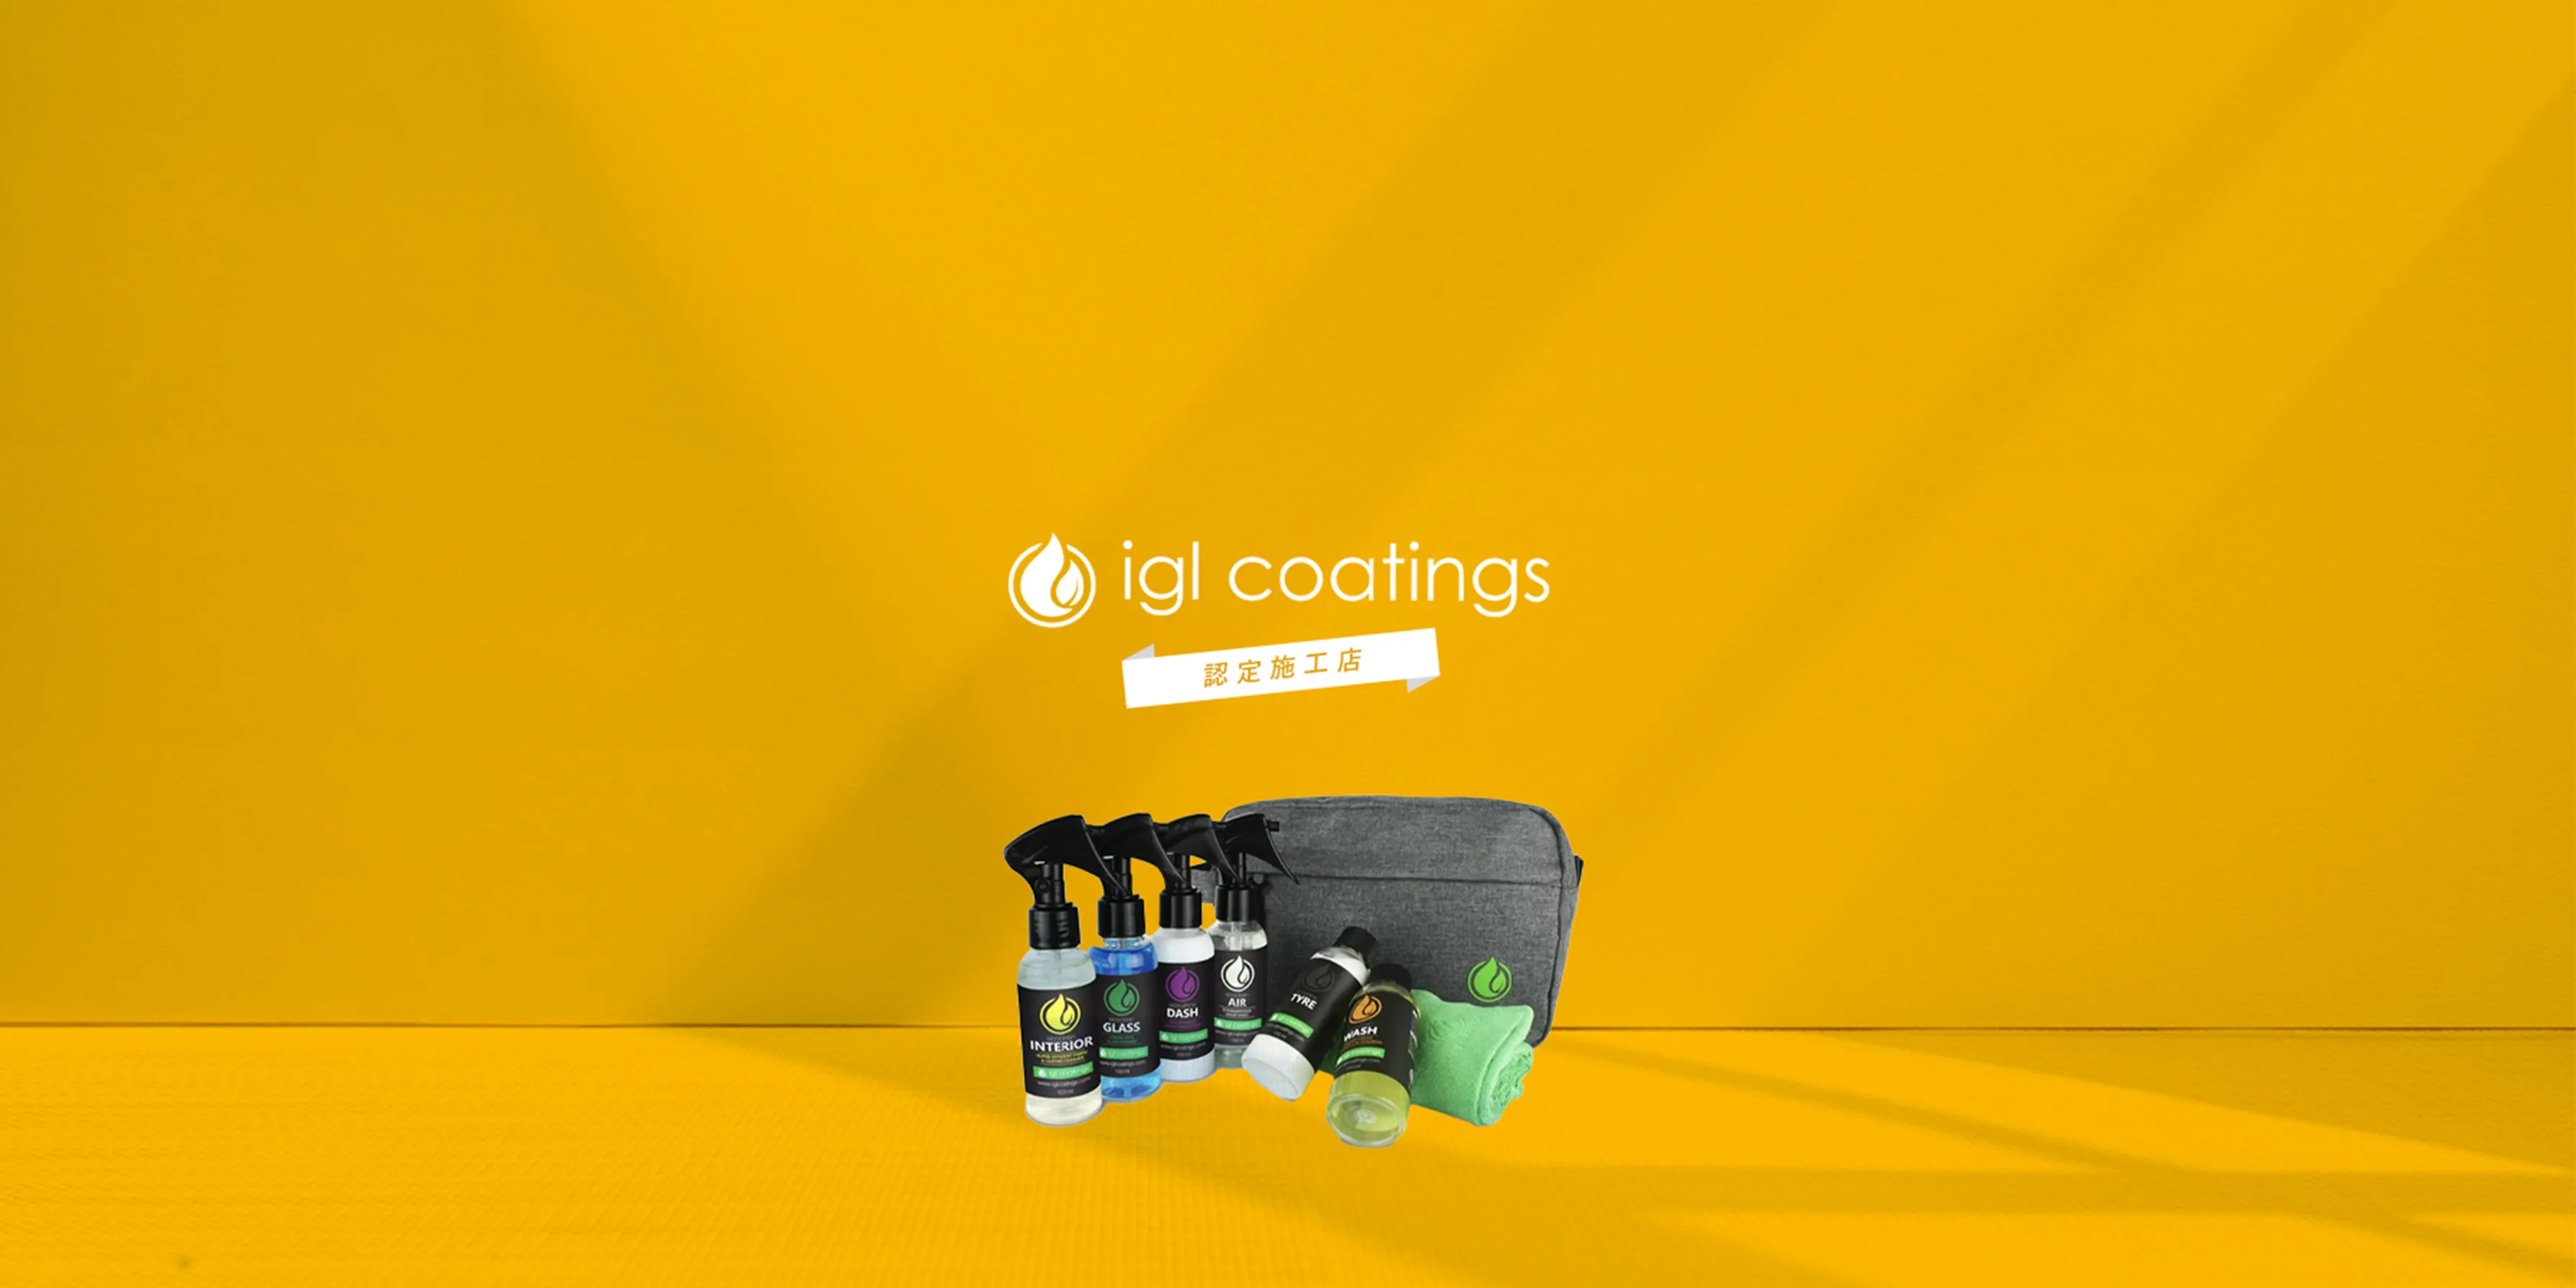 igl coatings